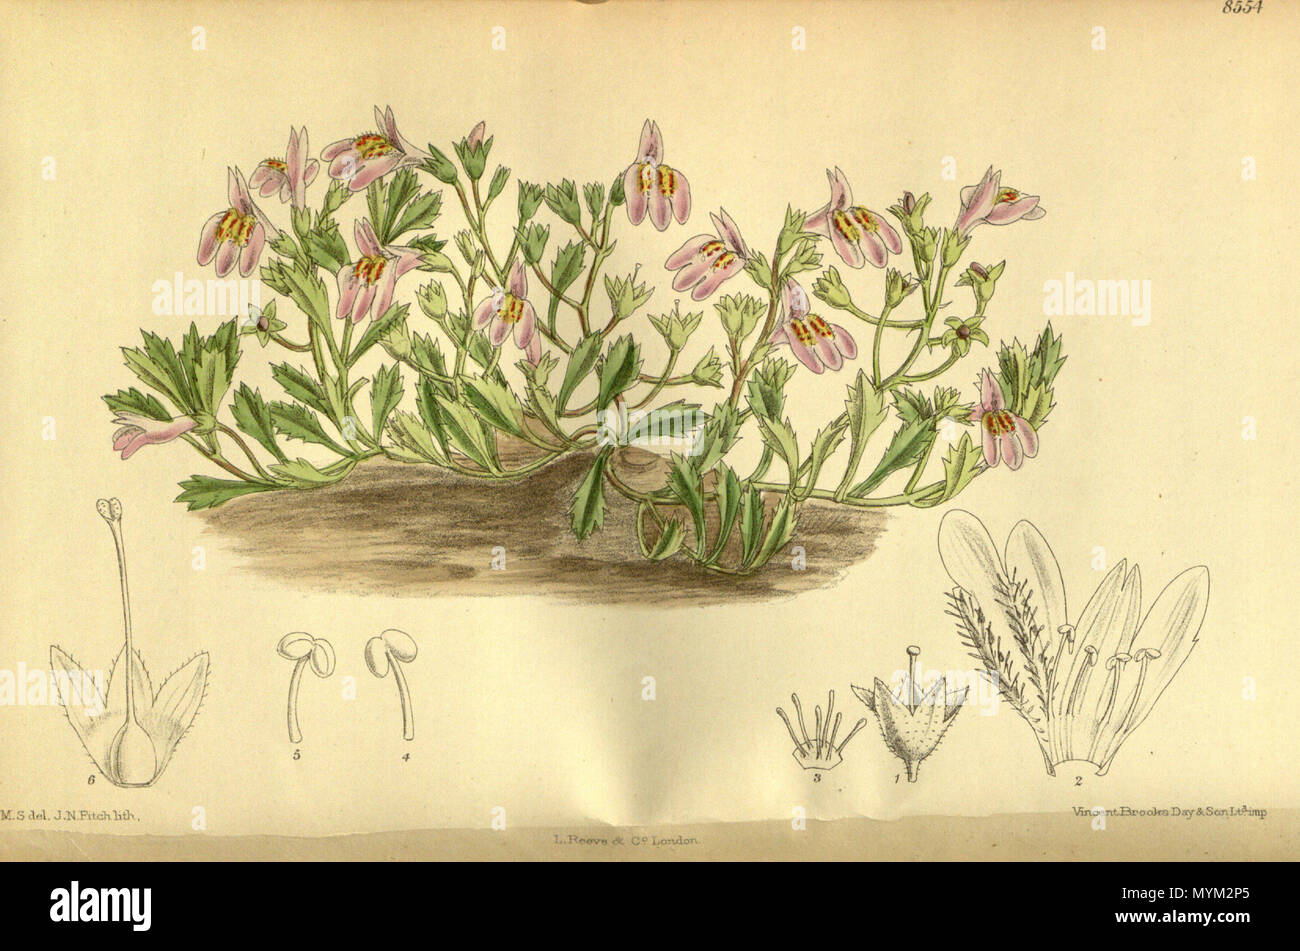 . Mazus reptans, Phrymaceae . 1914. M.S. del., J.N.Fitch lith. 357 Mazus reptans 140-8554 Stock Photo